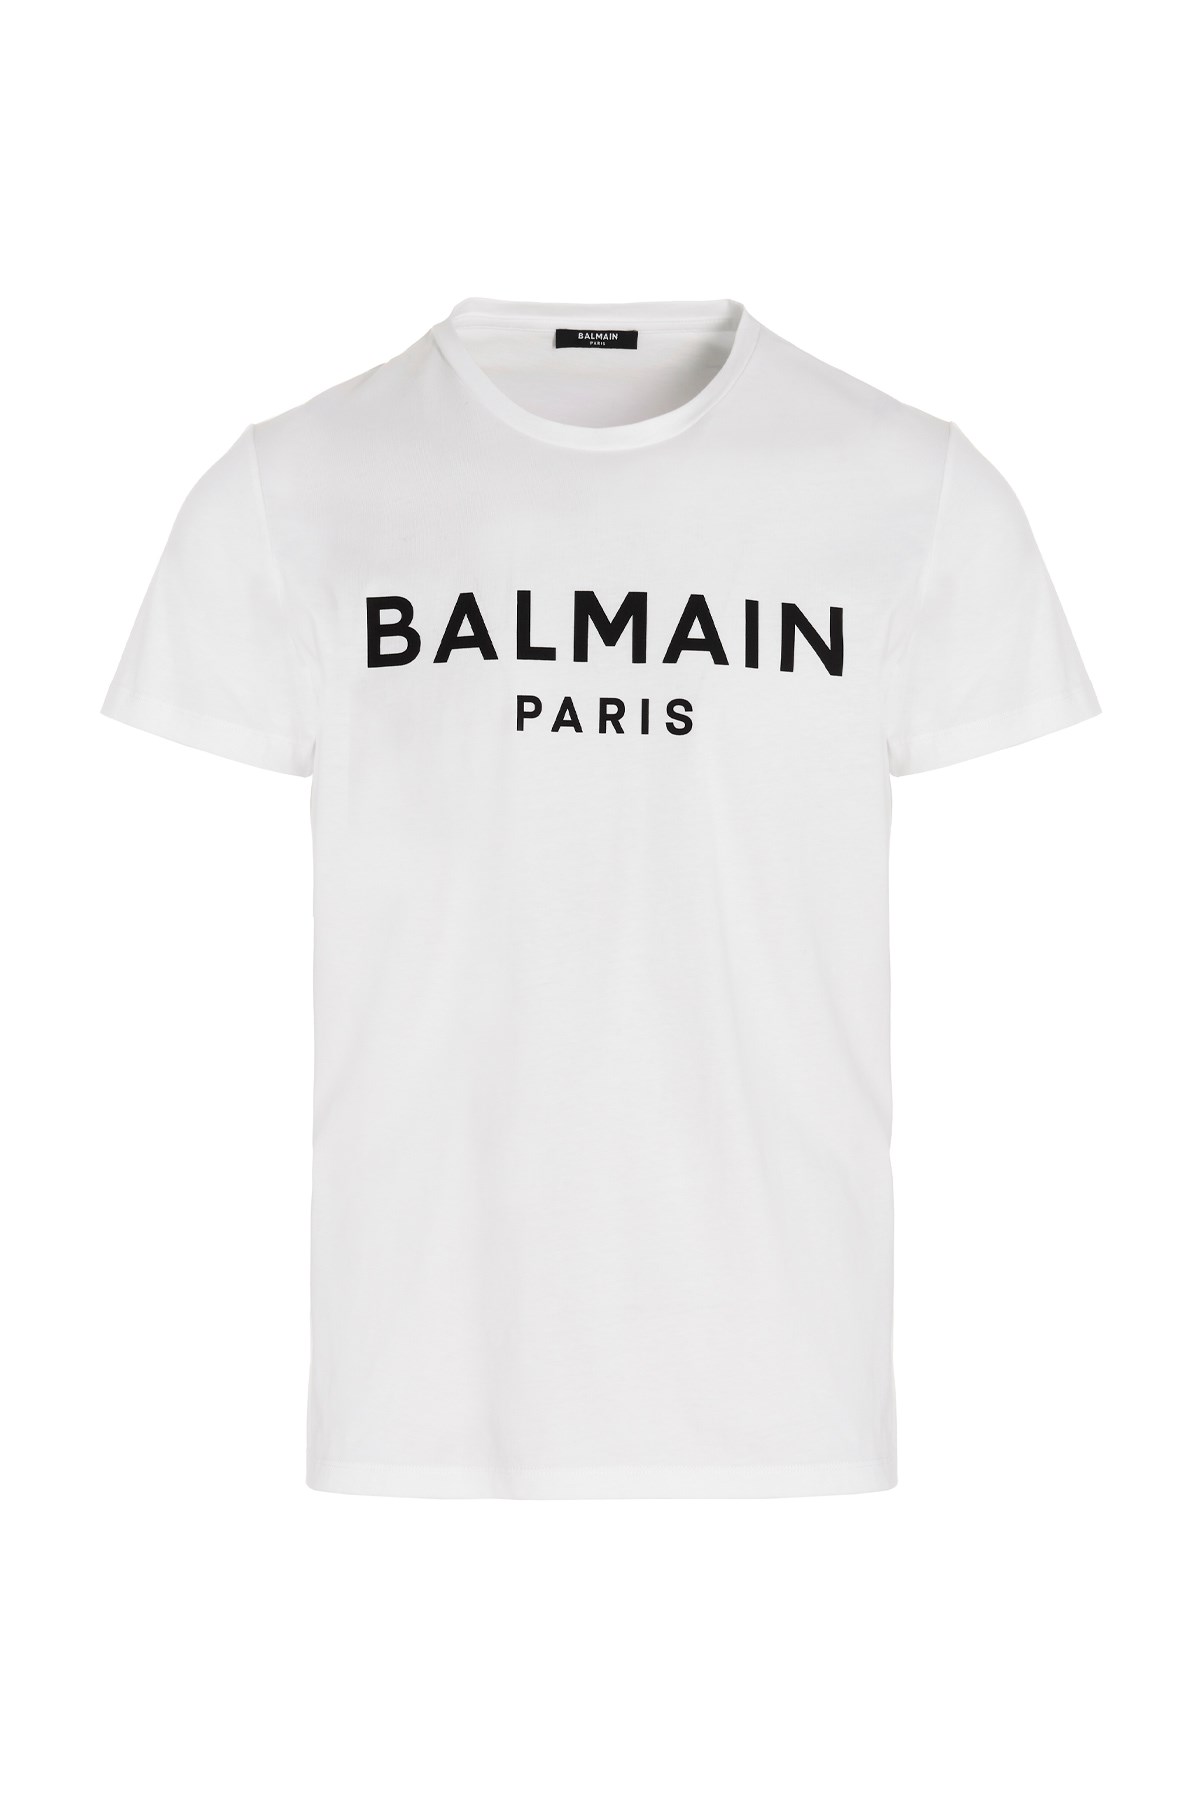 BALMAIN T-Shirt Mit Logoprint